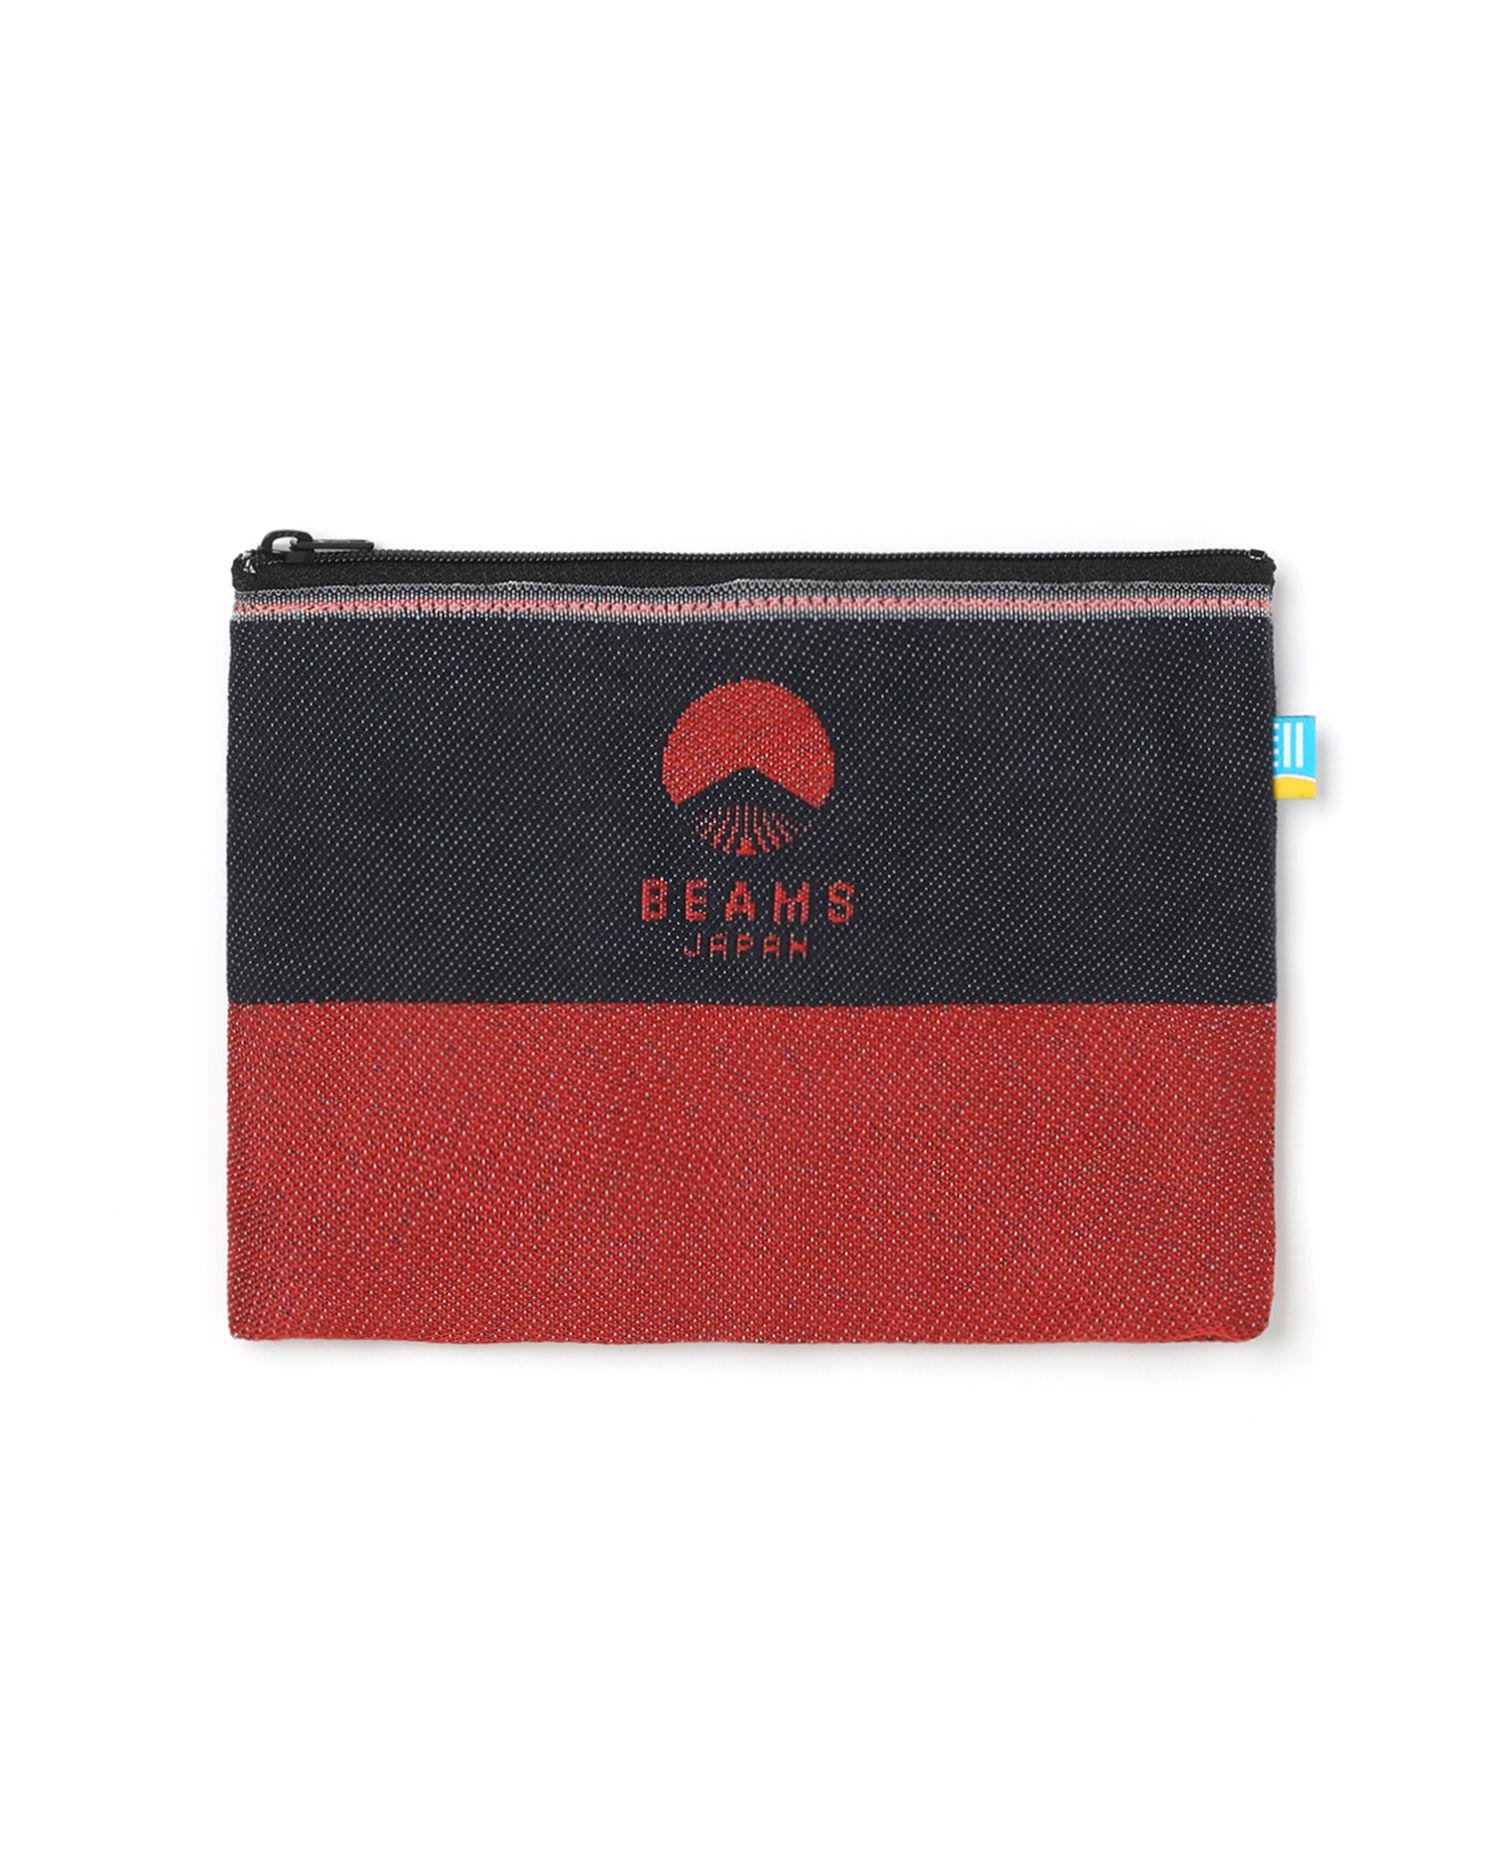 Colour block logo zip pouch by BEAMS JAPAN